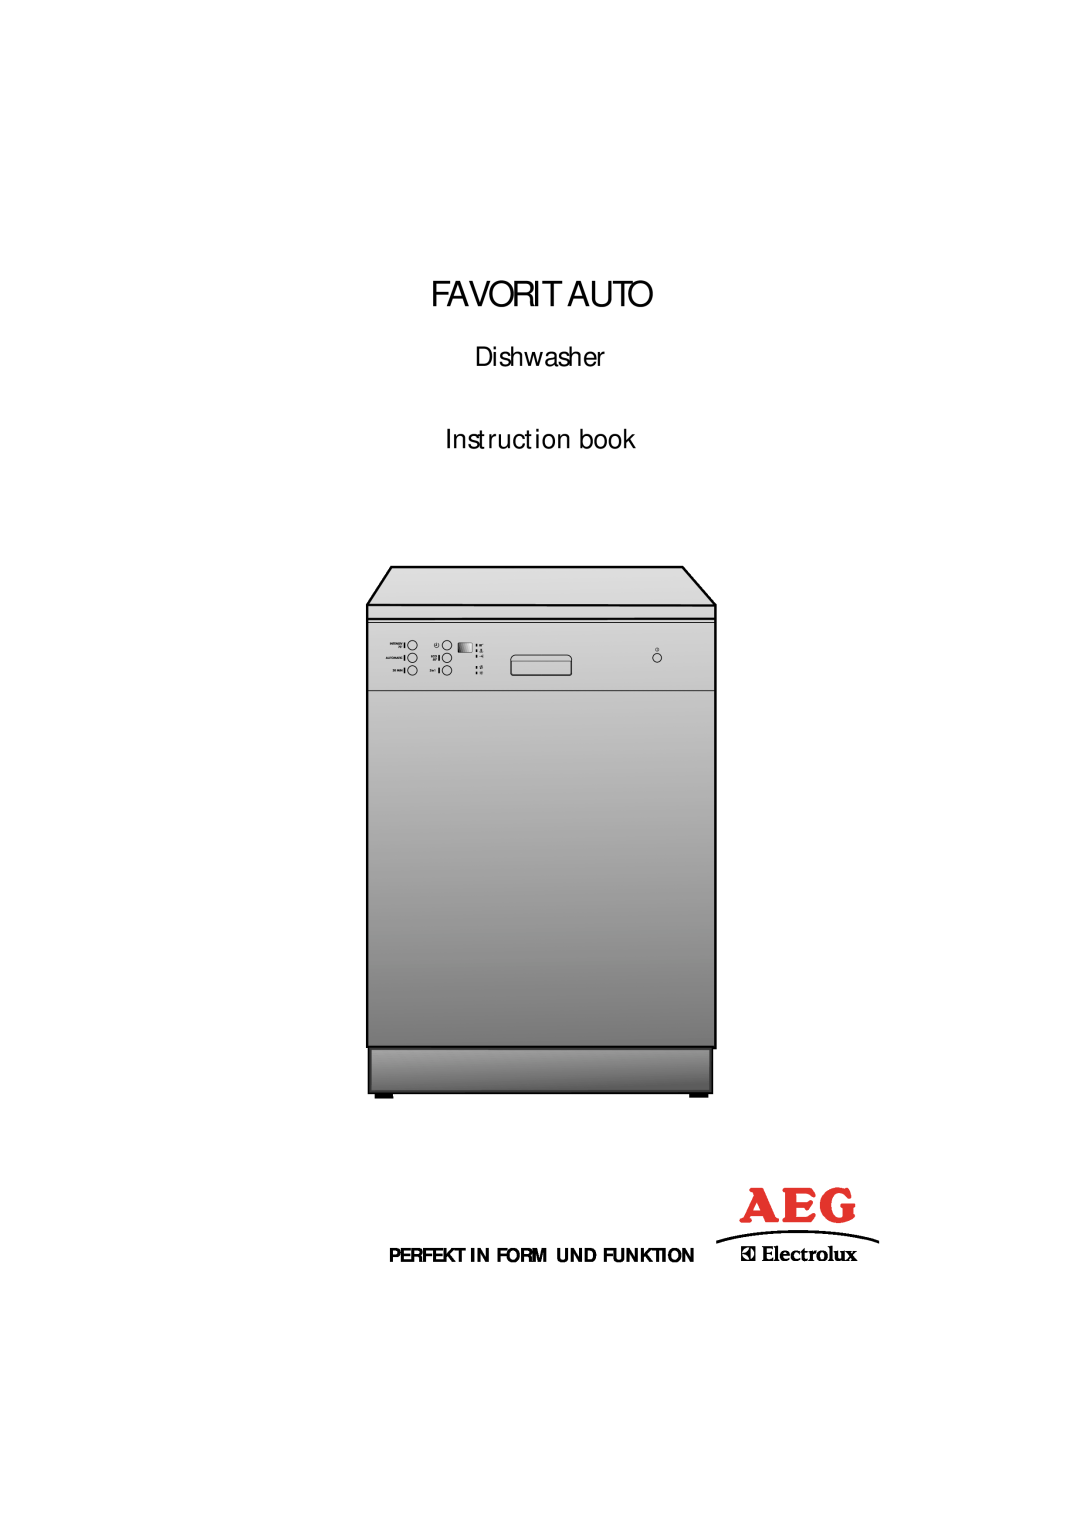 Electrolux U30205 manual Perfekt In Form Und Funktion, Favorit Auto, Dishwasher Instruction book 